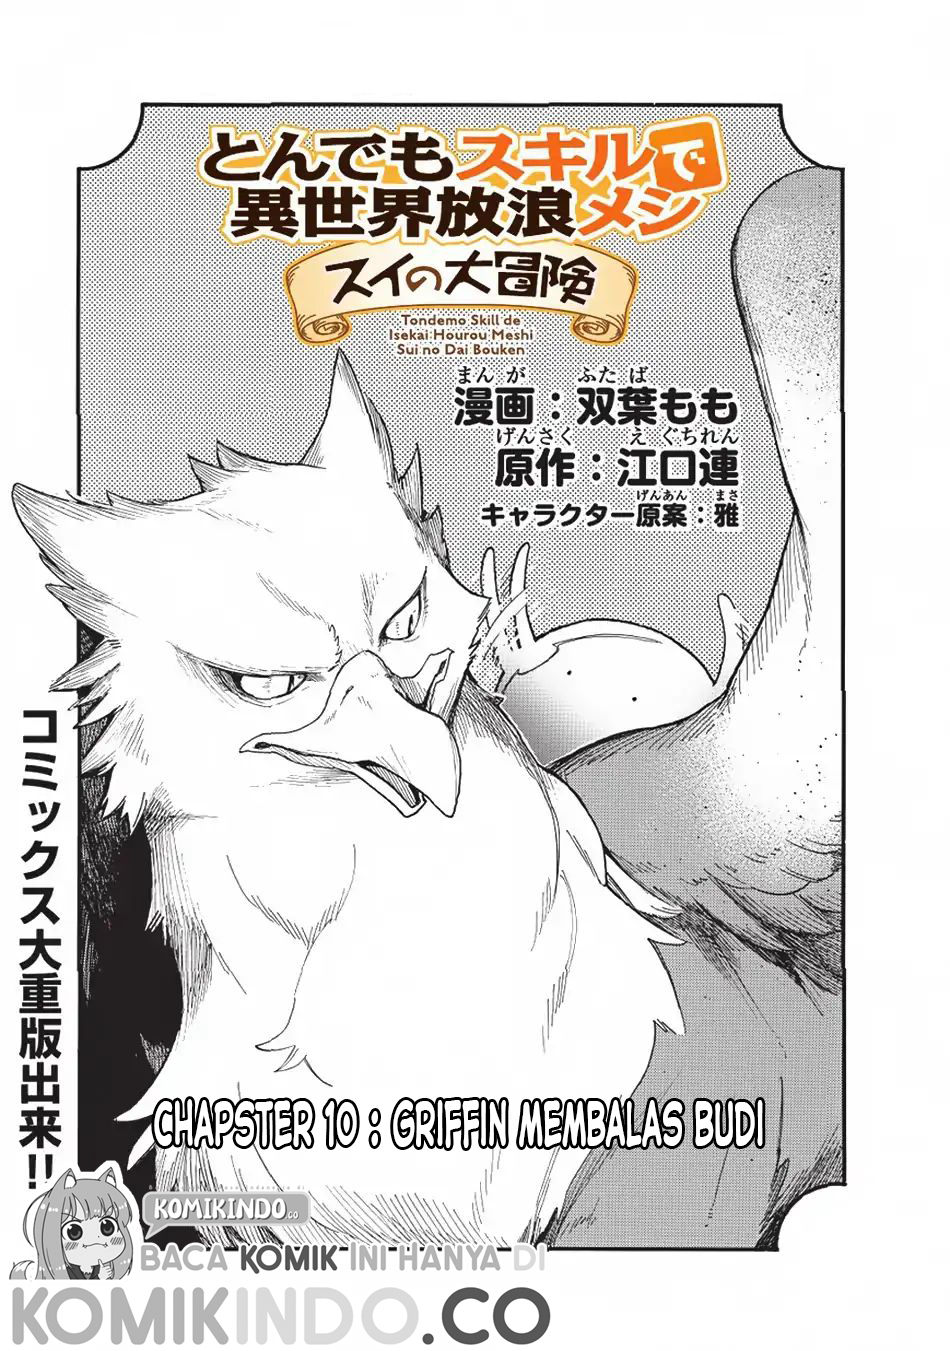 Tondemo Skill de Isekai Hourou Meshi: Sui no Daibouken Chapter 10